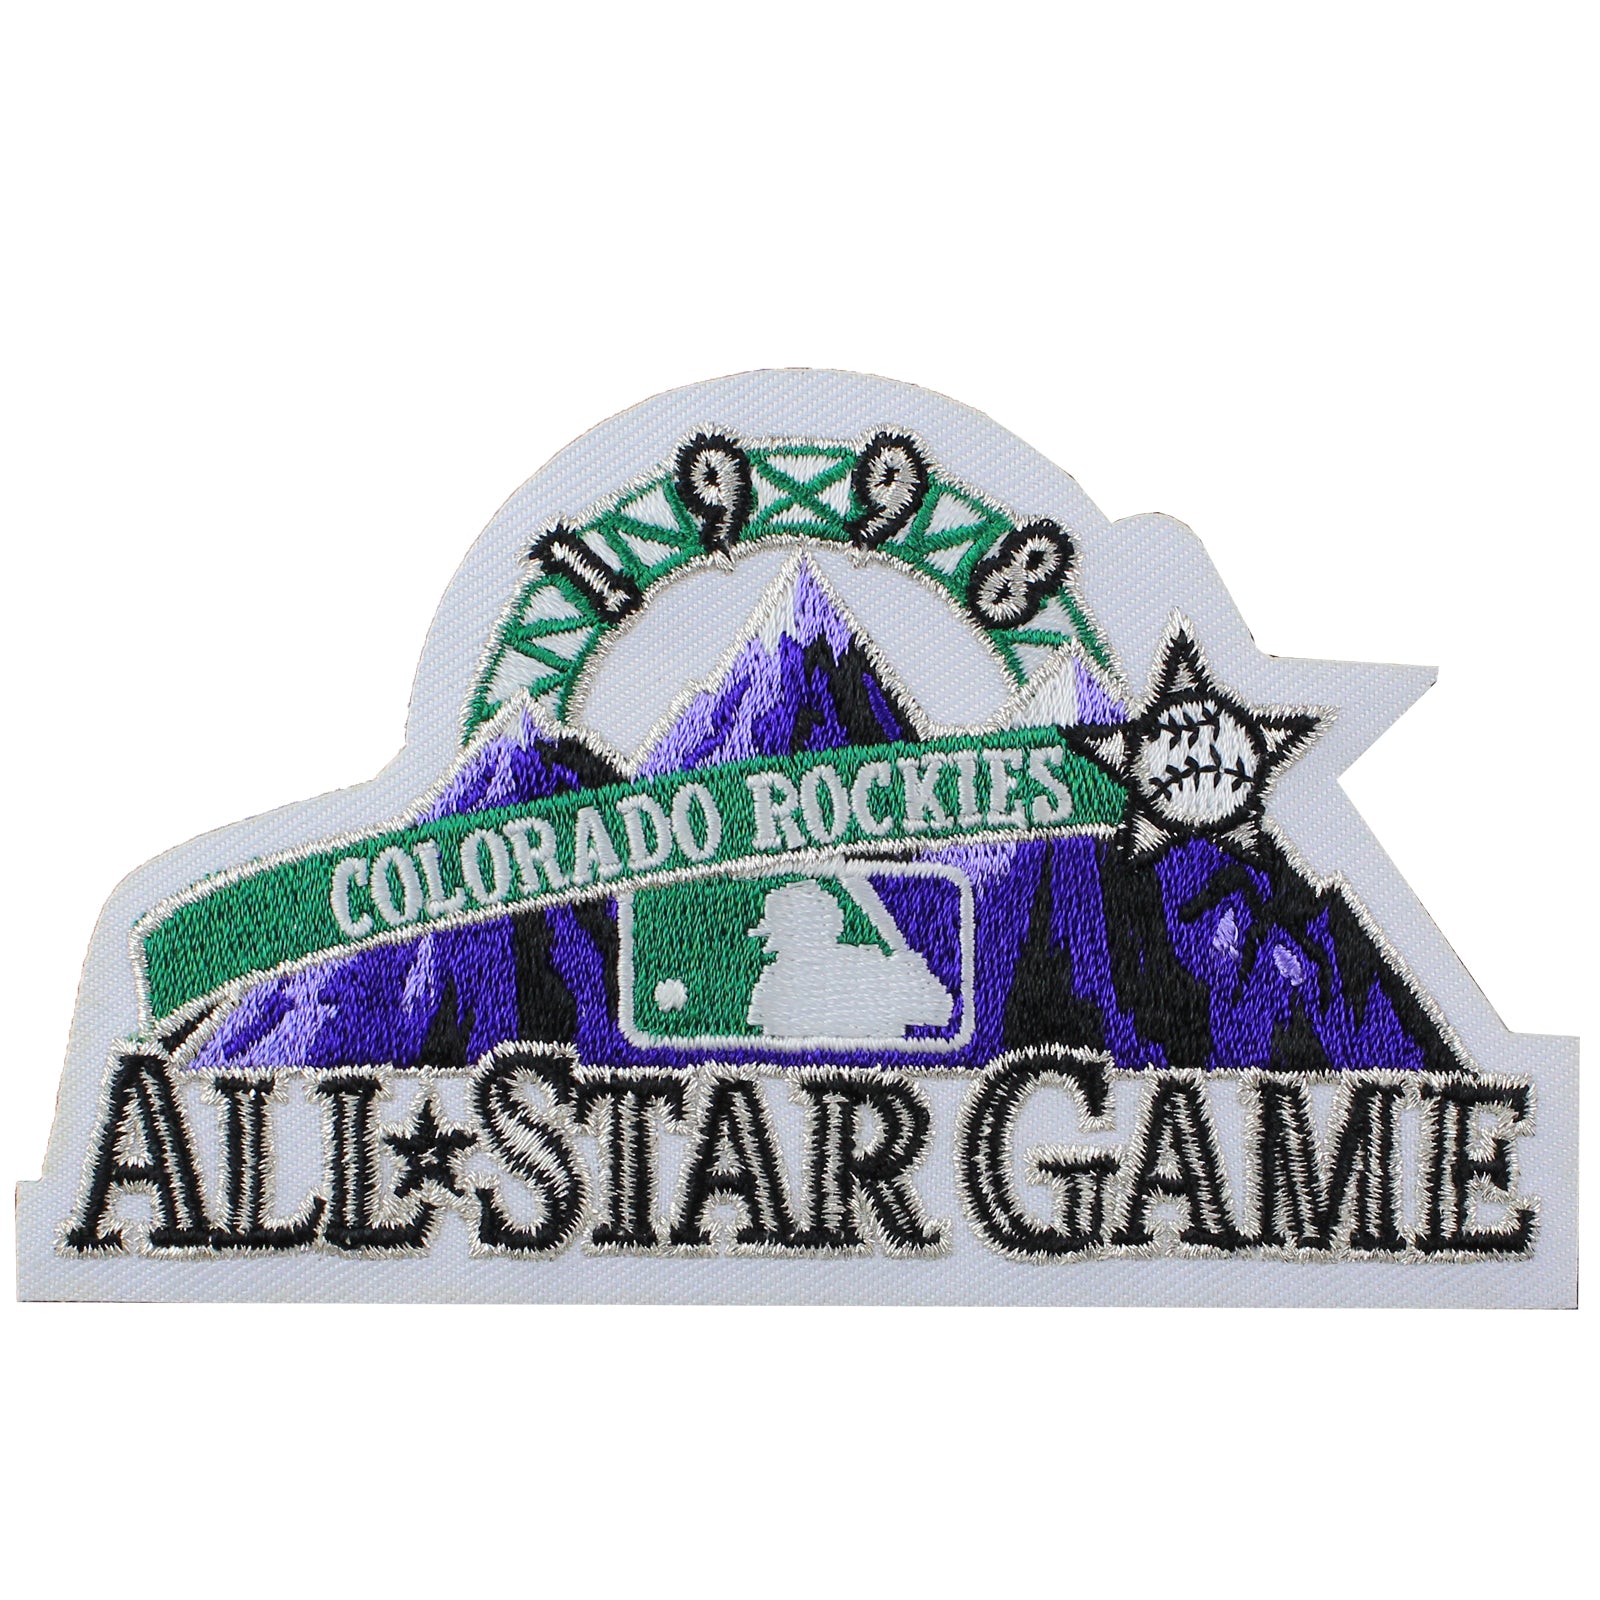 Get Your Own Colorado Rockies Lilo & Stitch Baseball Jersey